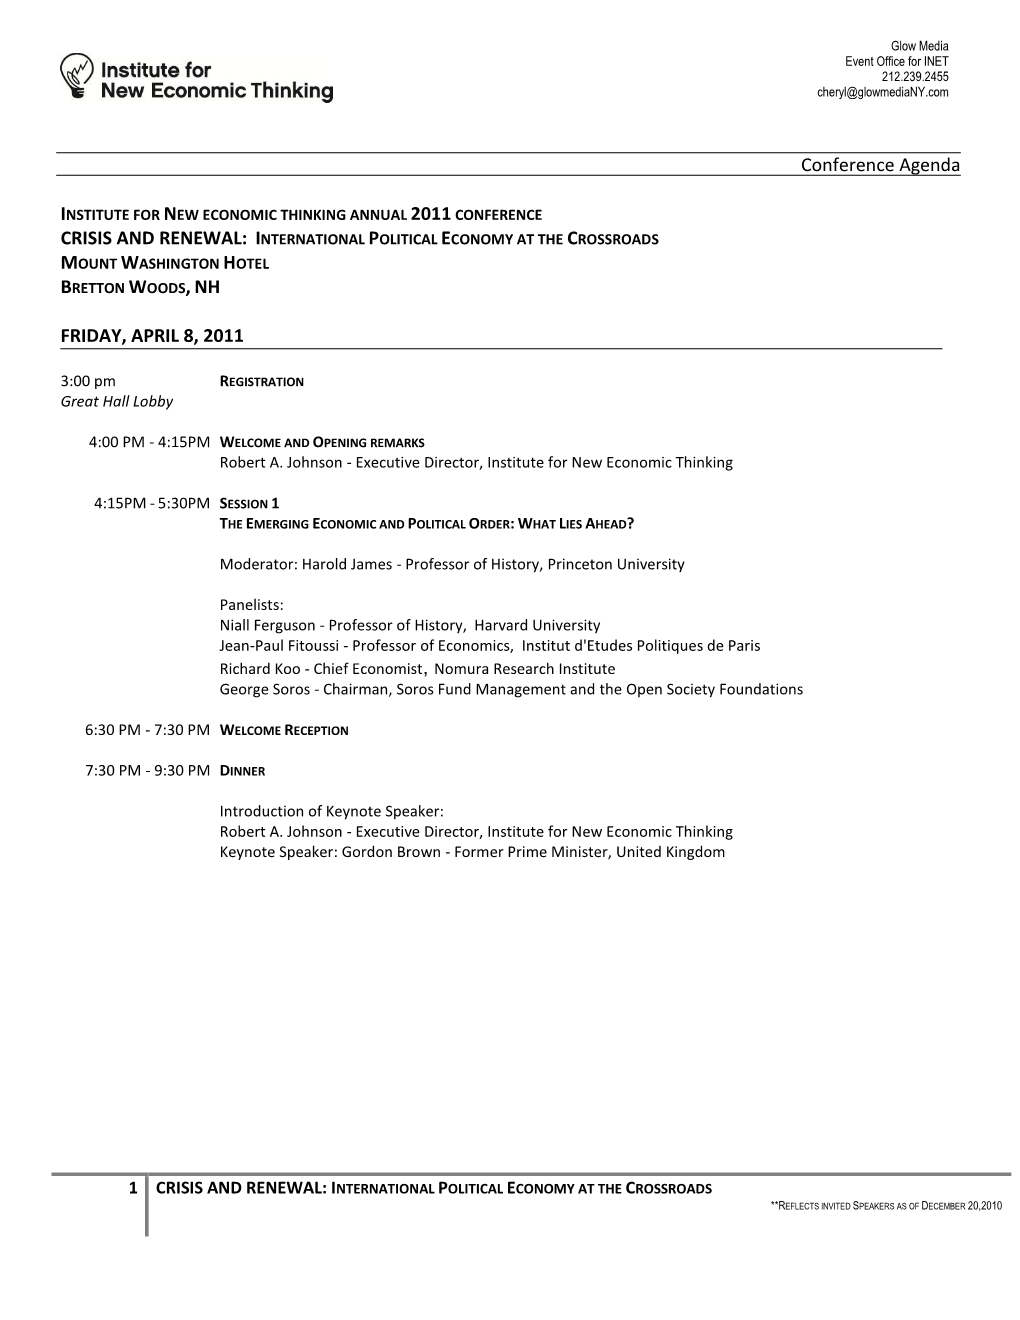 Conference Agenda CRISIS and RENEWAL: INTERNATIONAL